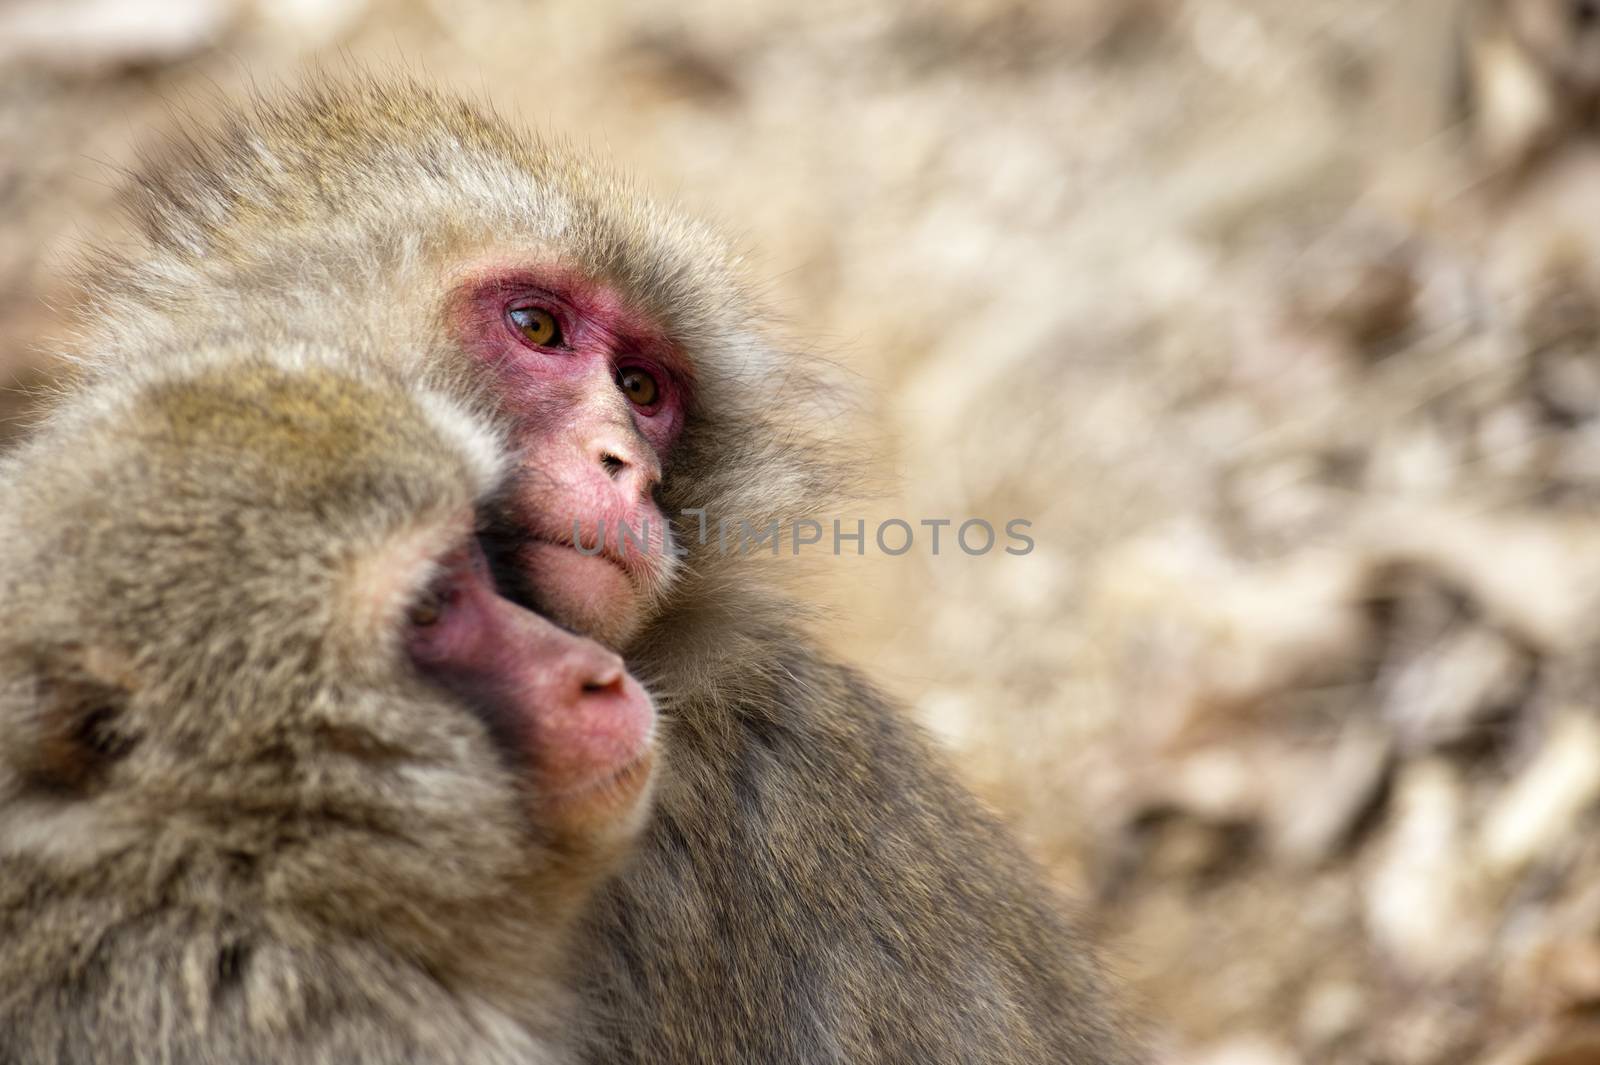 Pair of little monkeys in park by stockarch